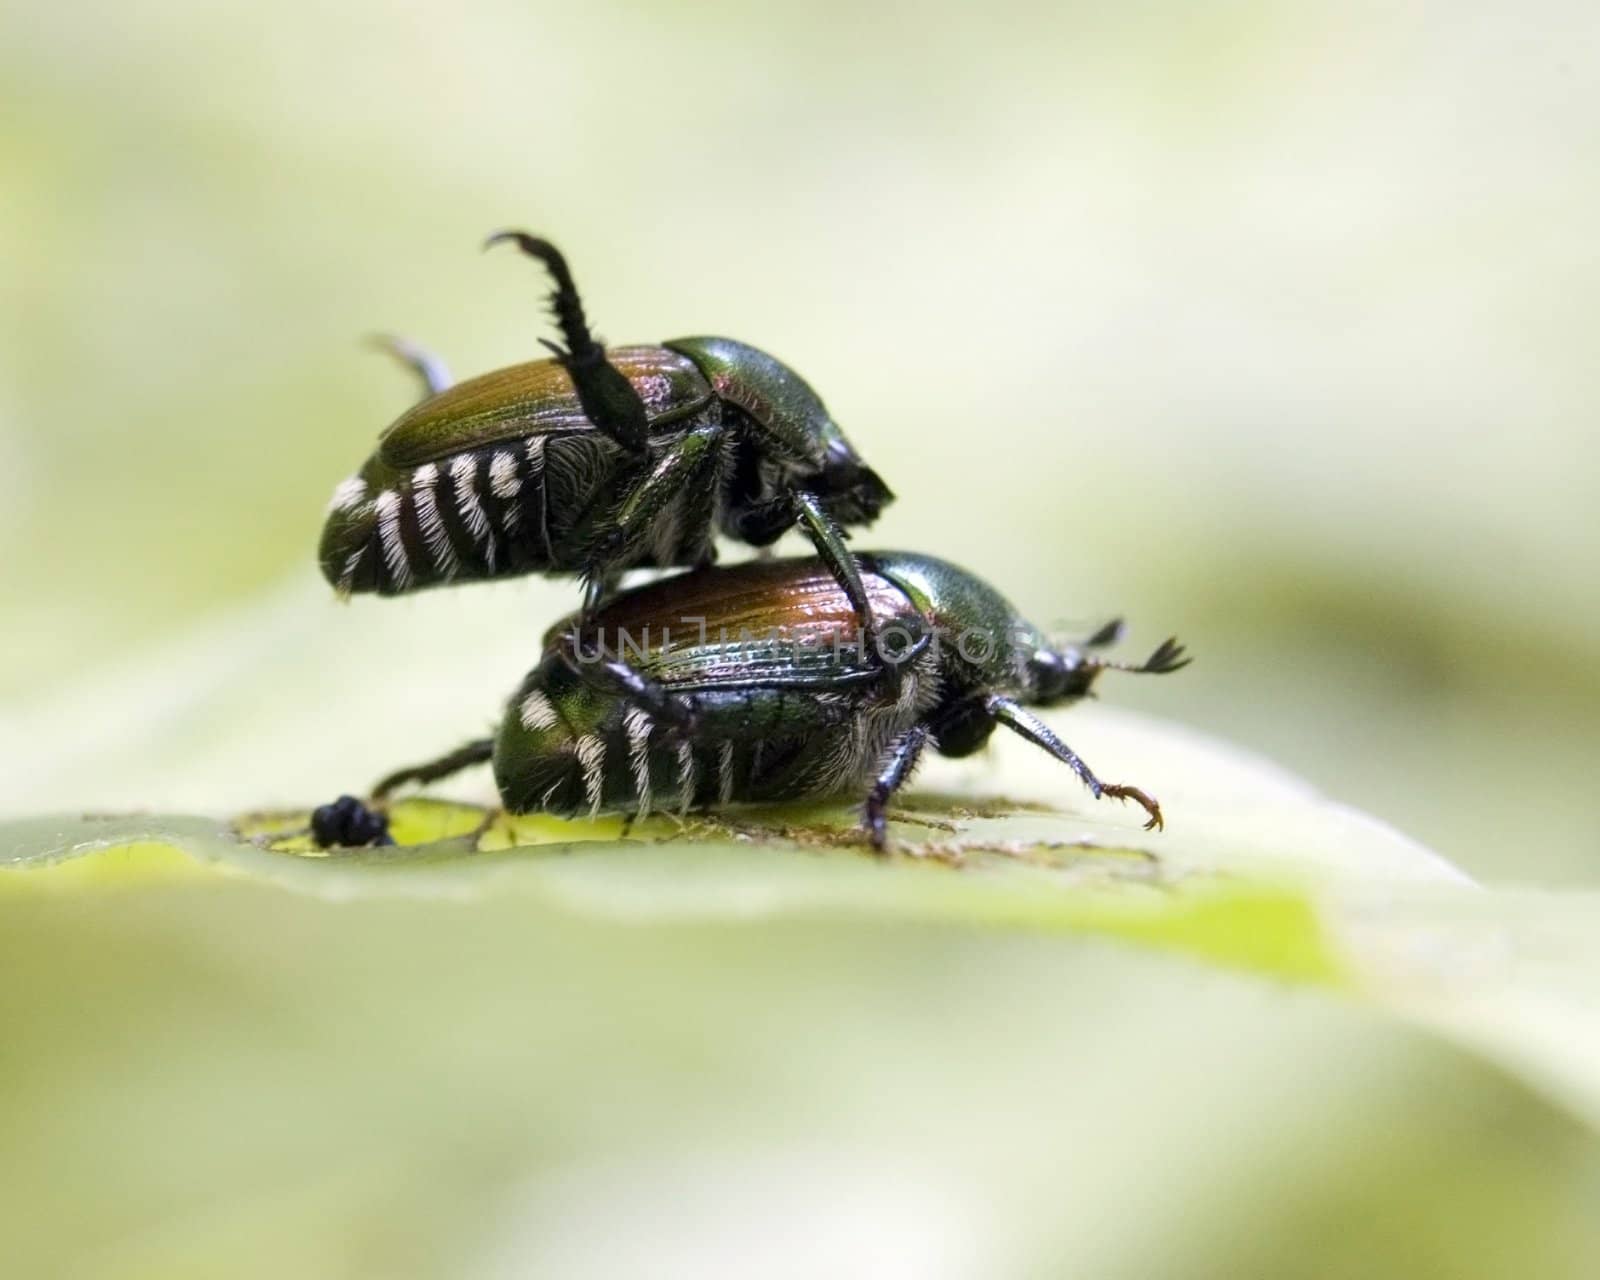 A pair of Japanese beetles mating on leaf.